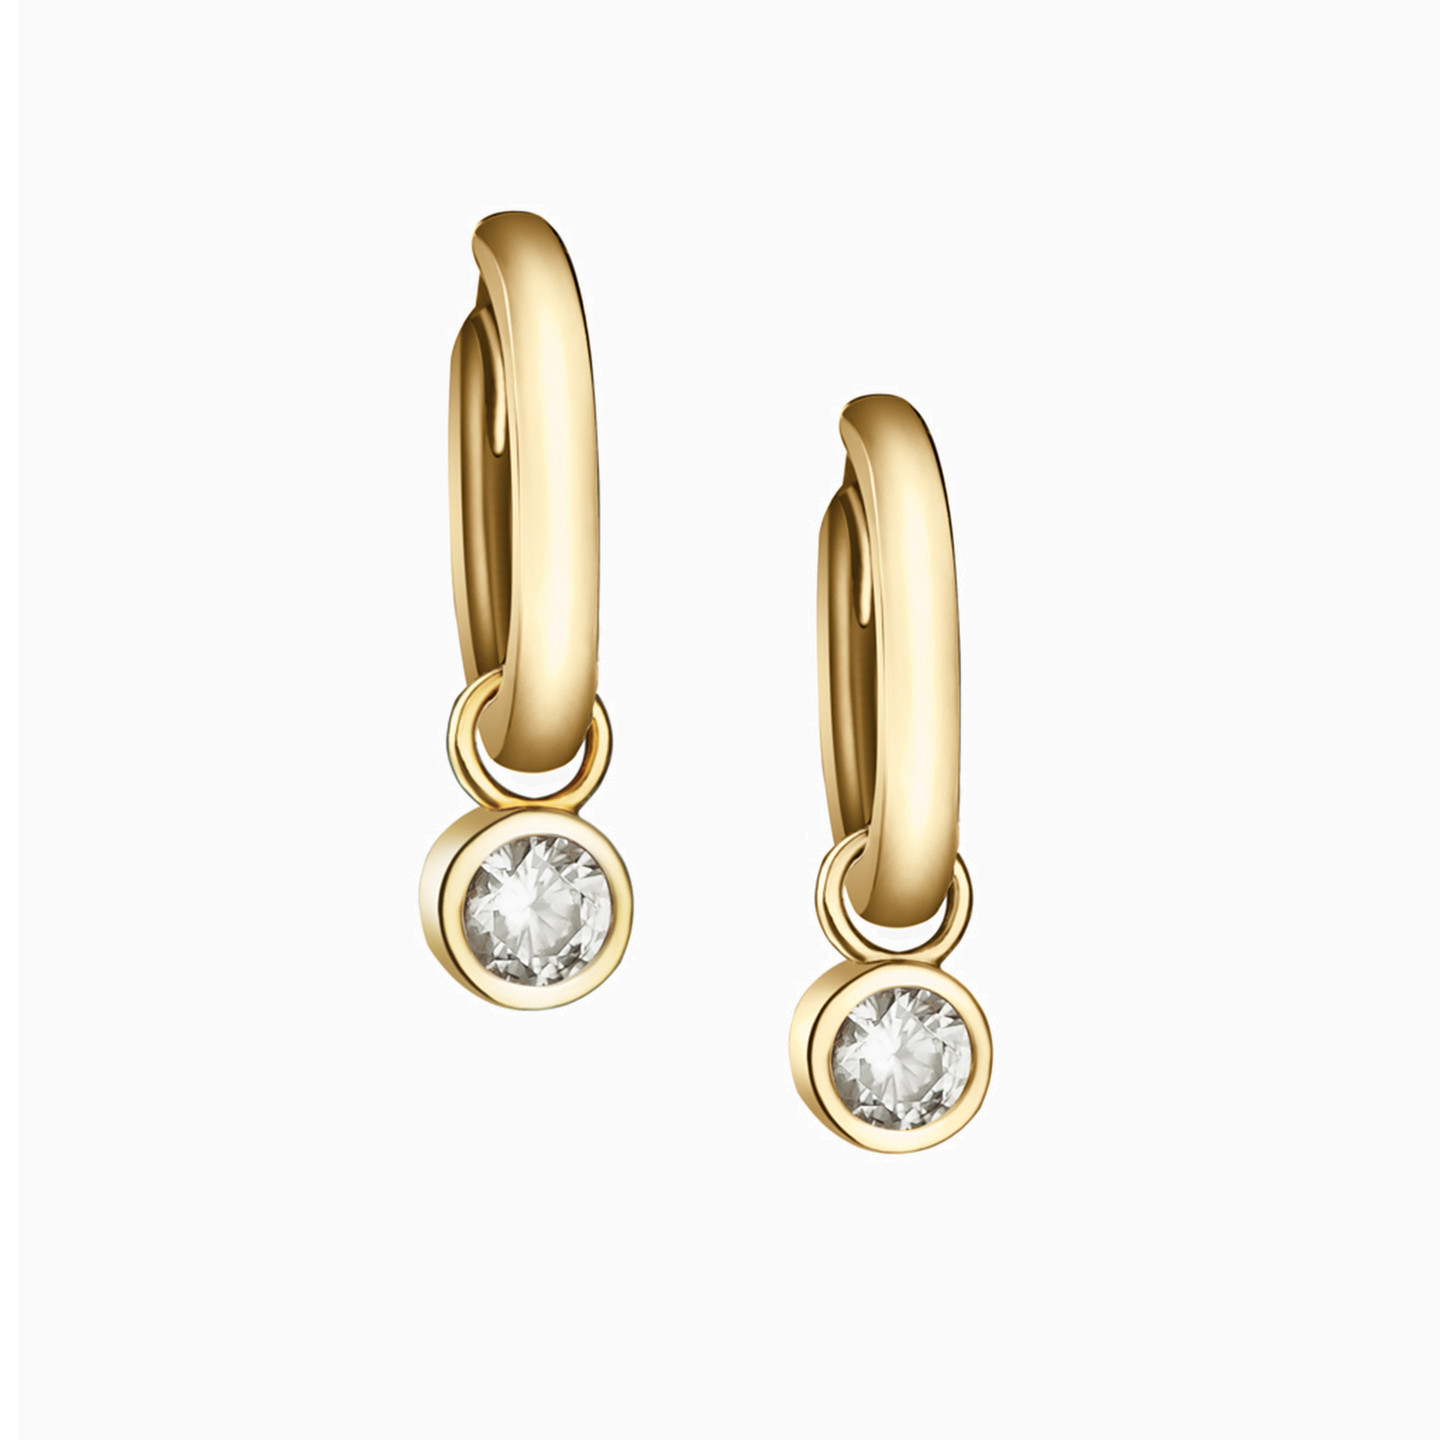 Gold Plated Cubic Zirconia Drop Earrings - 2